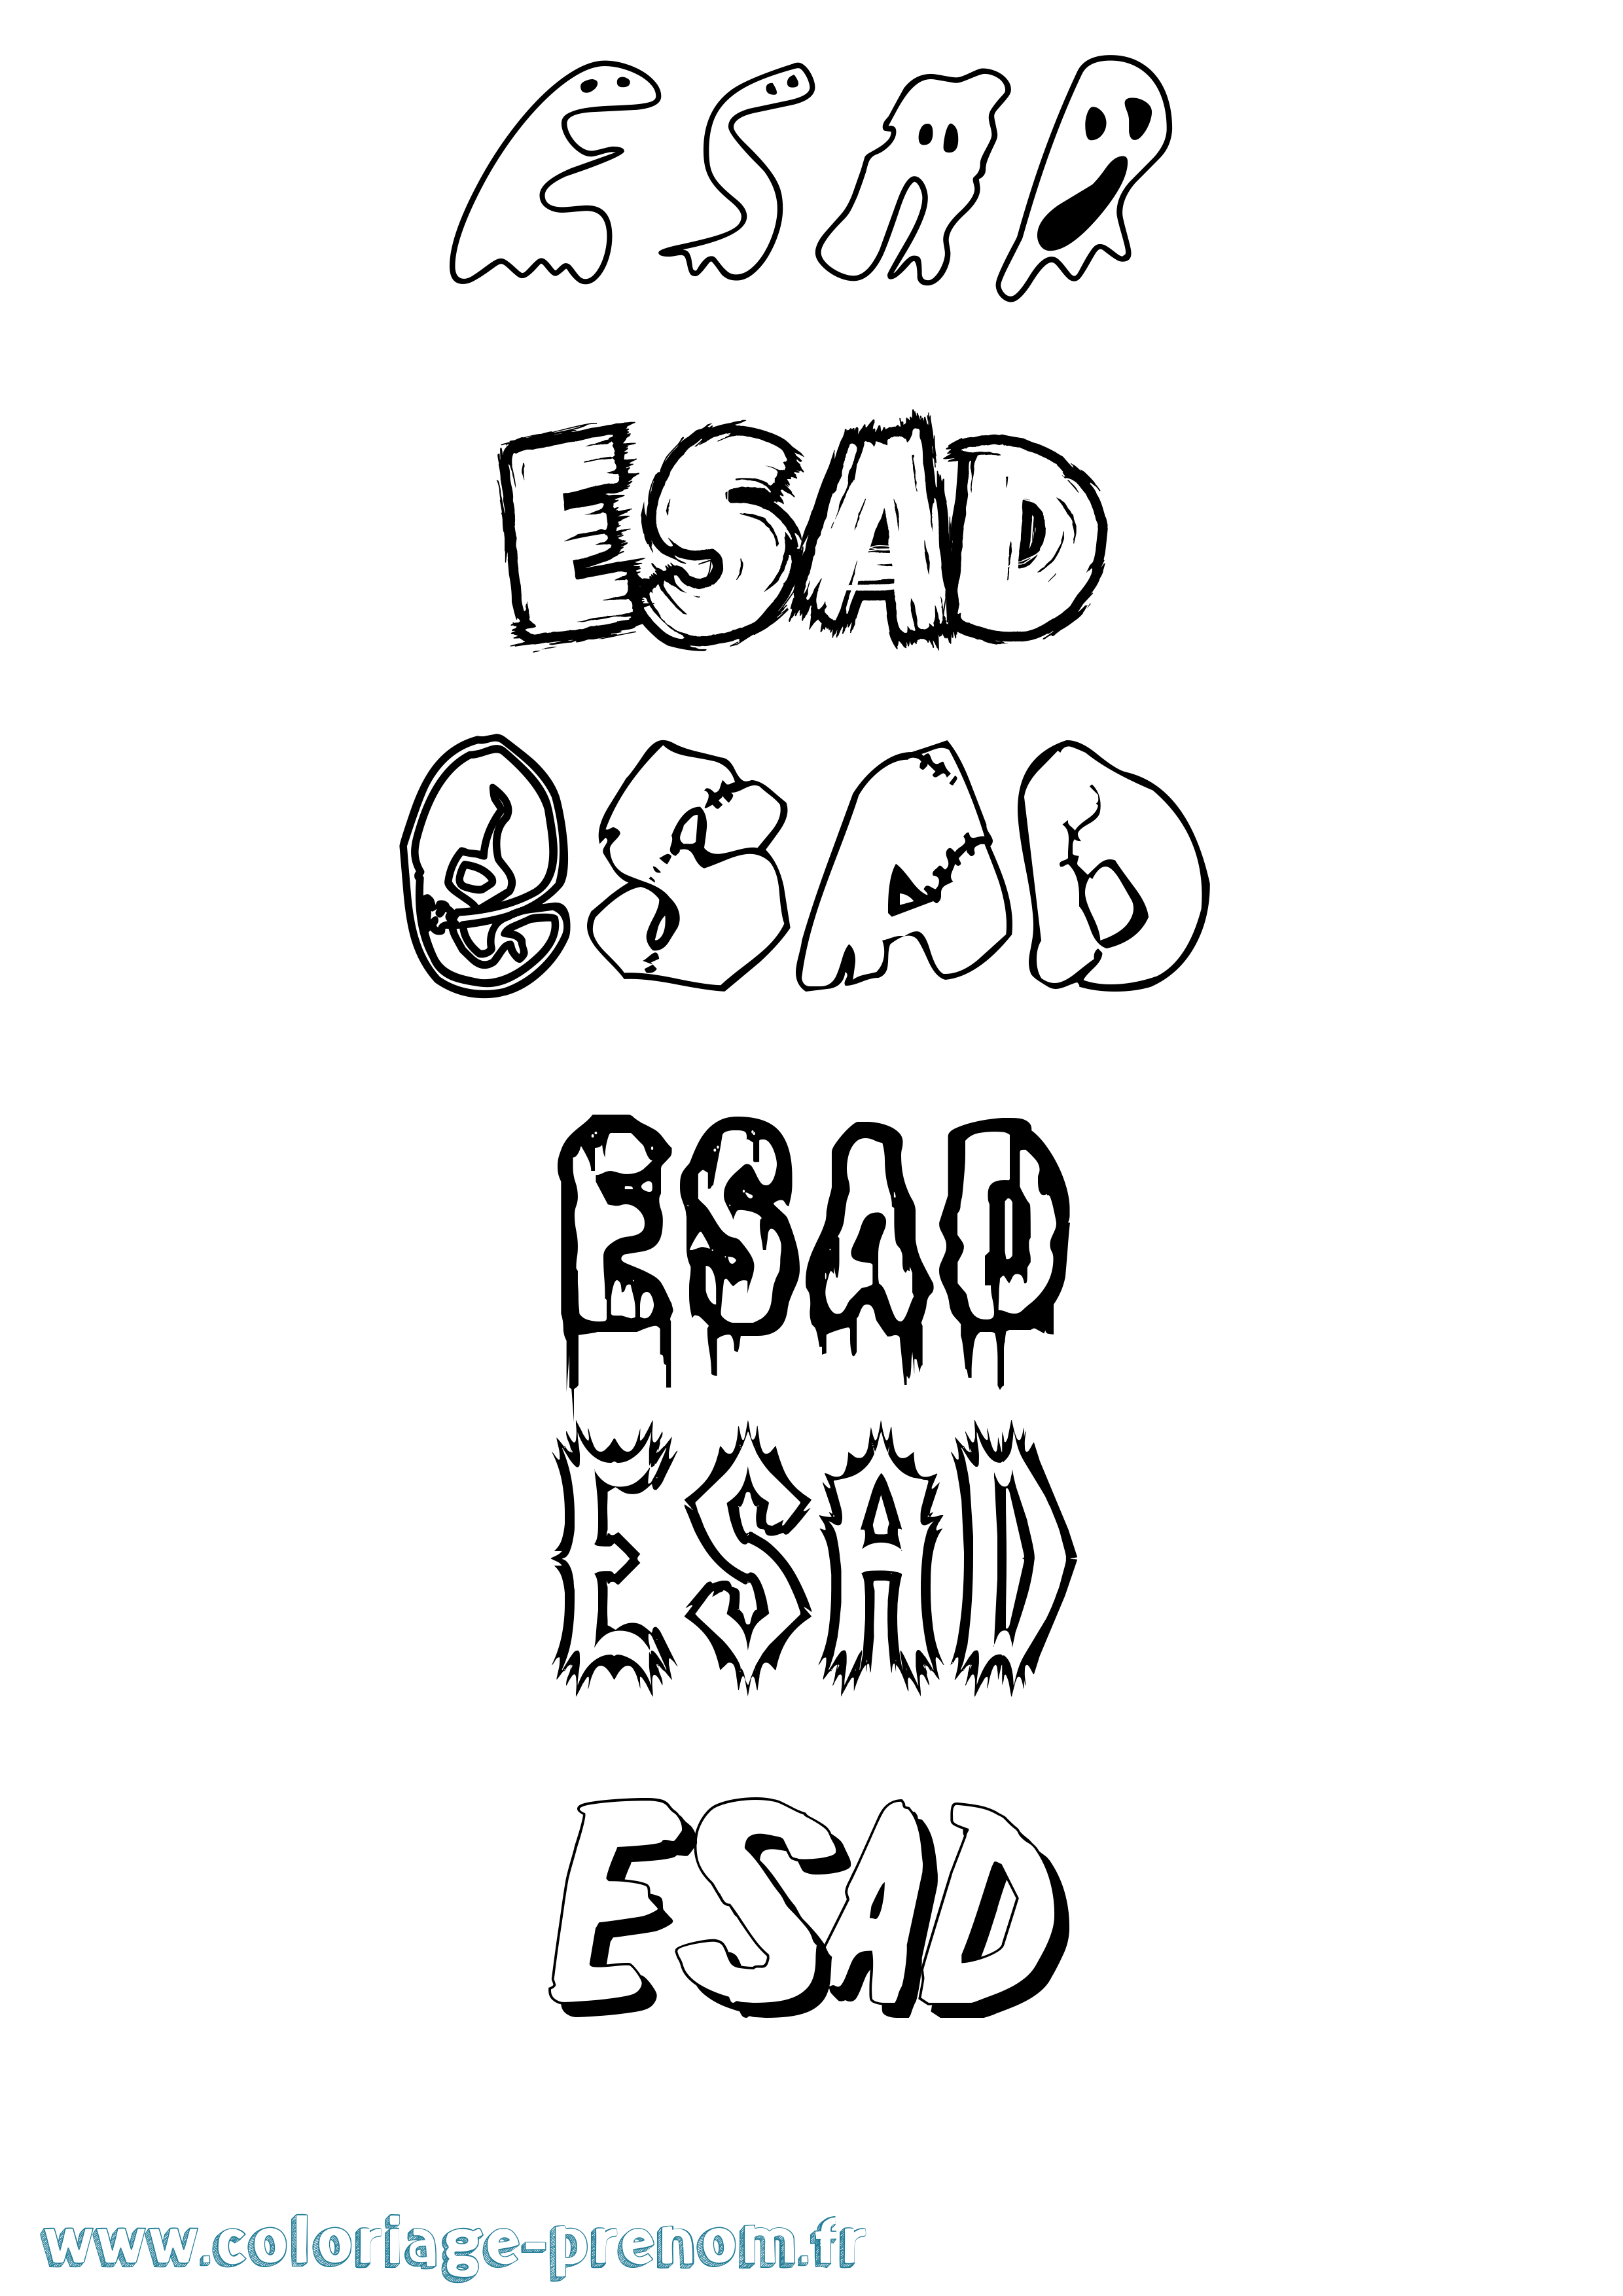 Coloriage prénom Esad Frisson